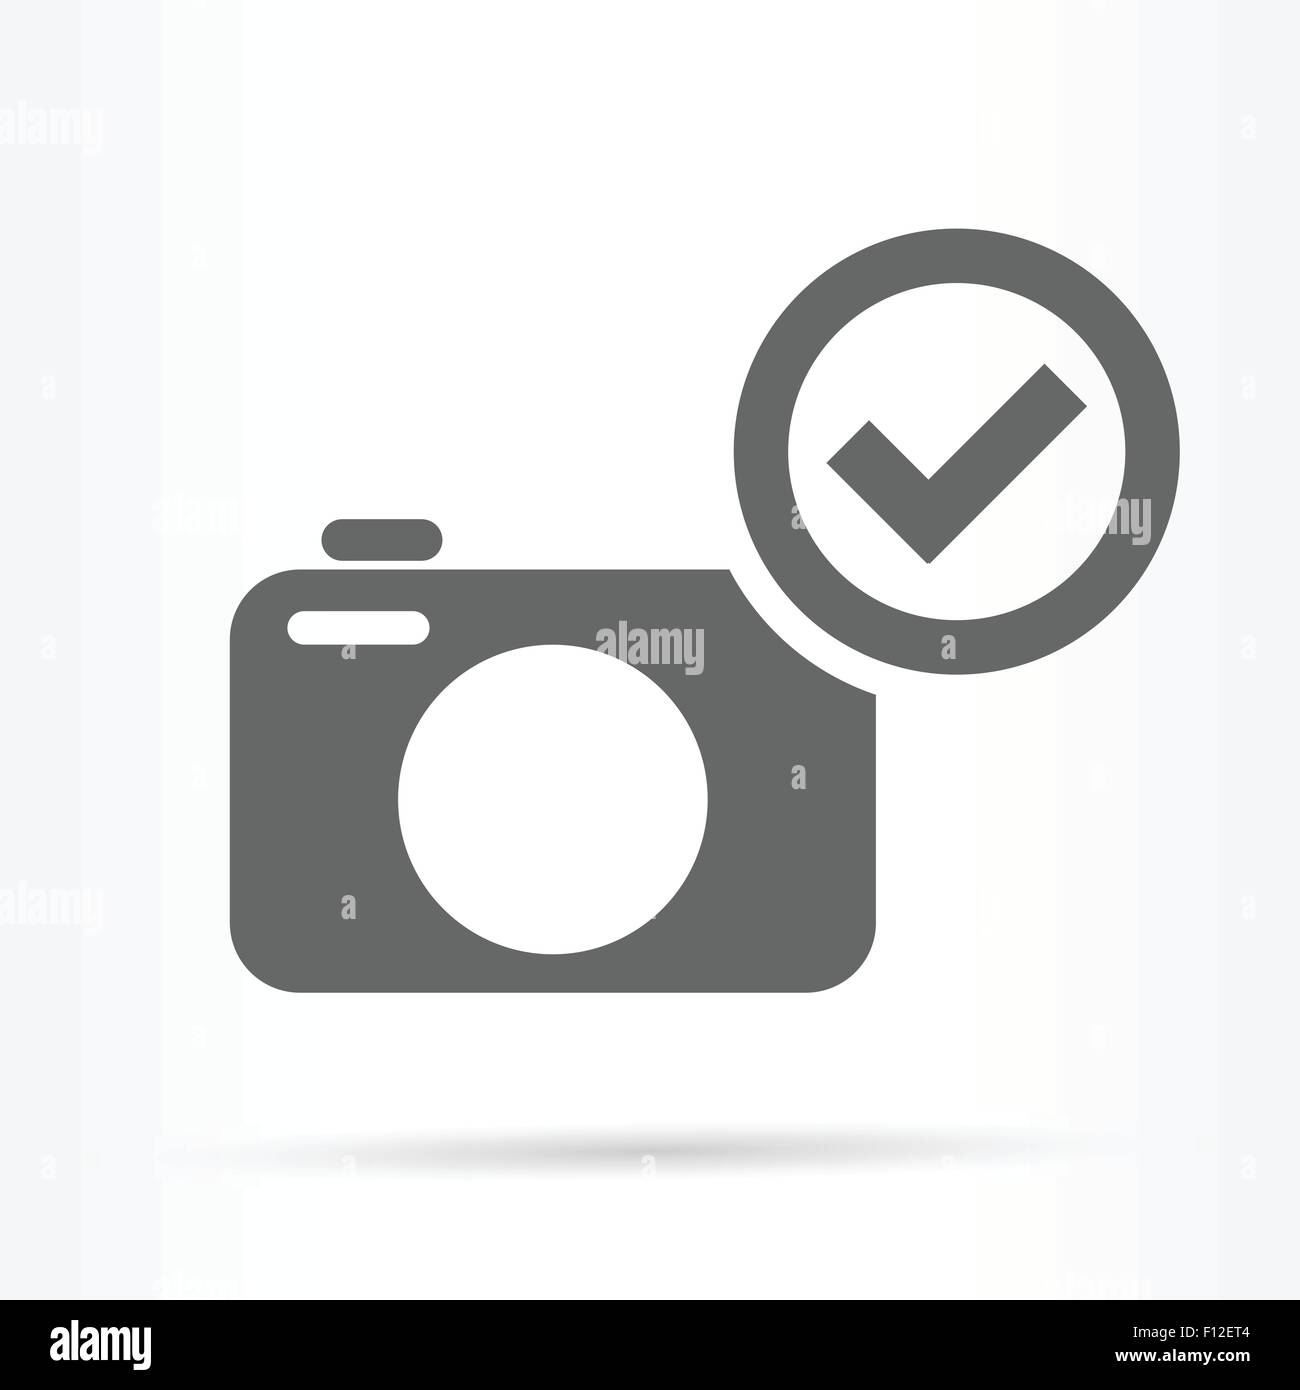 camera confirm image icon vector illustration Stock Vector